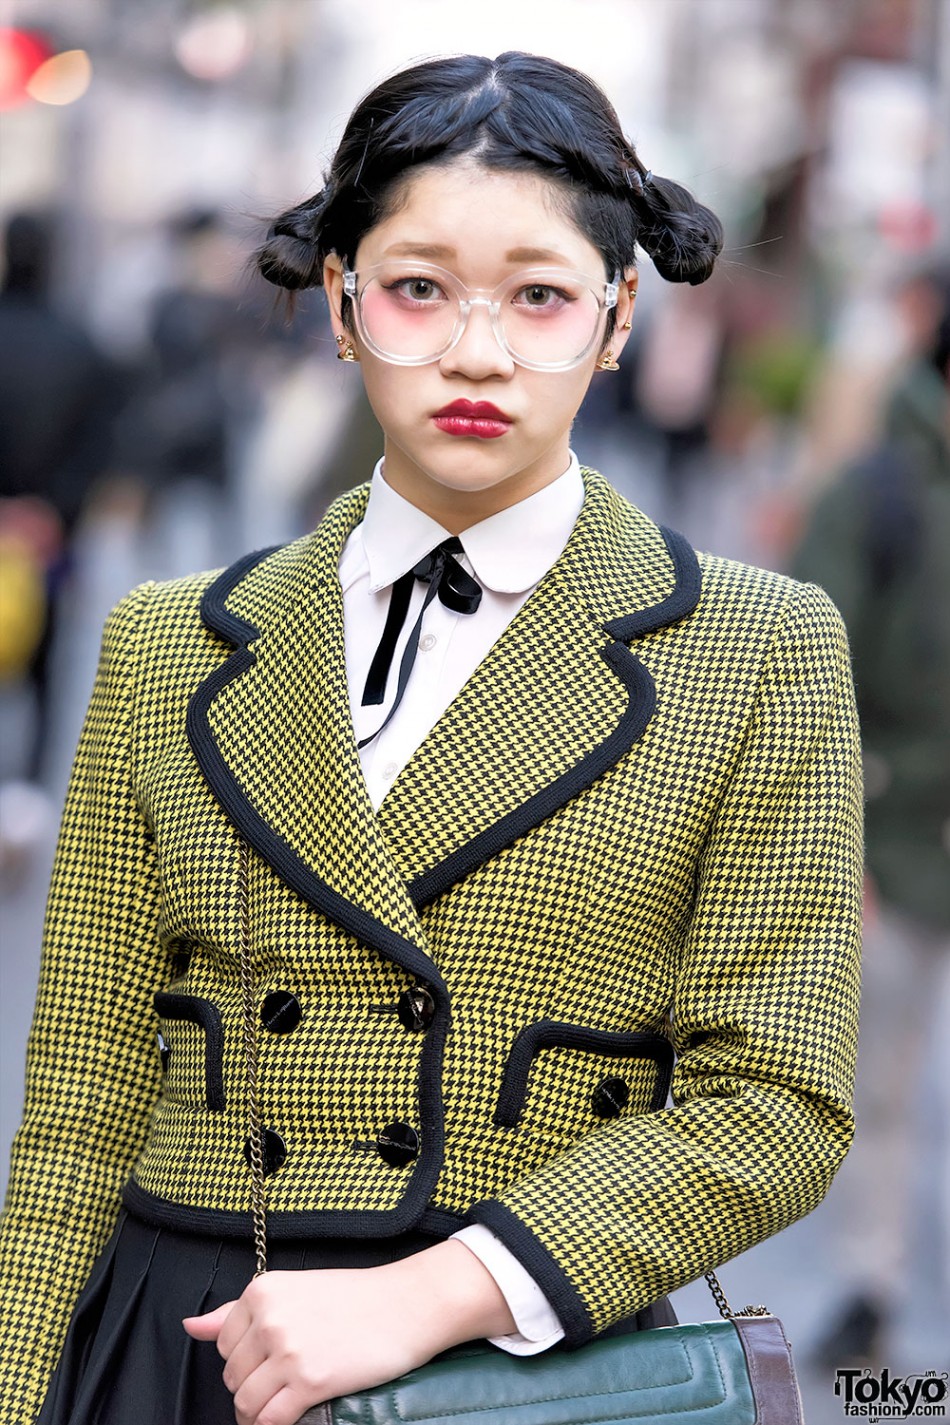 Harajuku Girl In Glasses W Yellow Houndstooth Jacket And Yru Sandals Tokyo Fashion